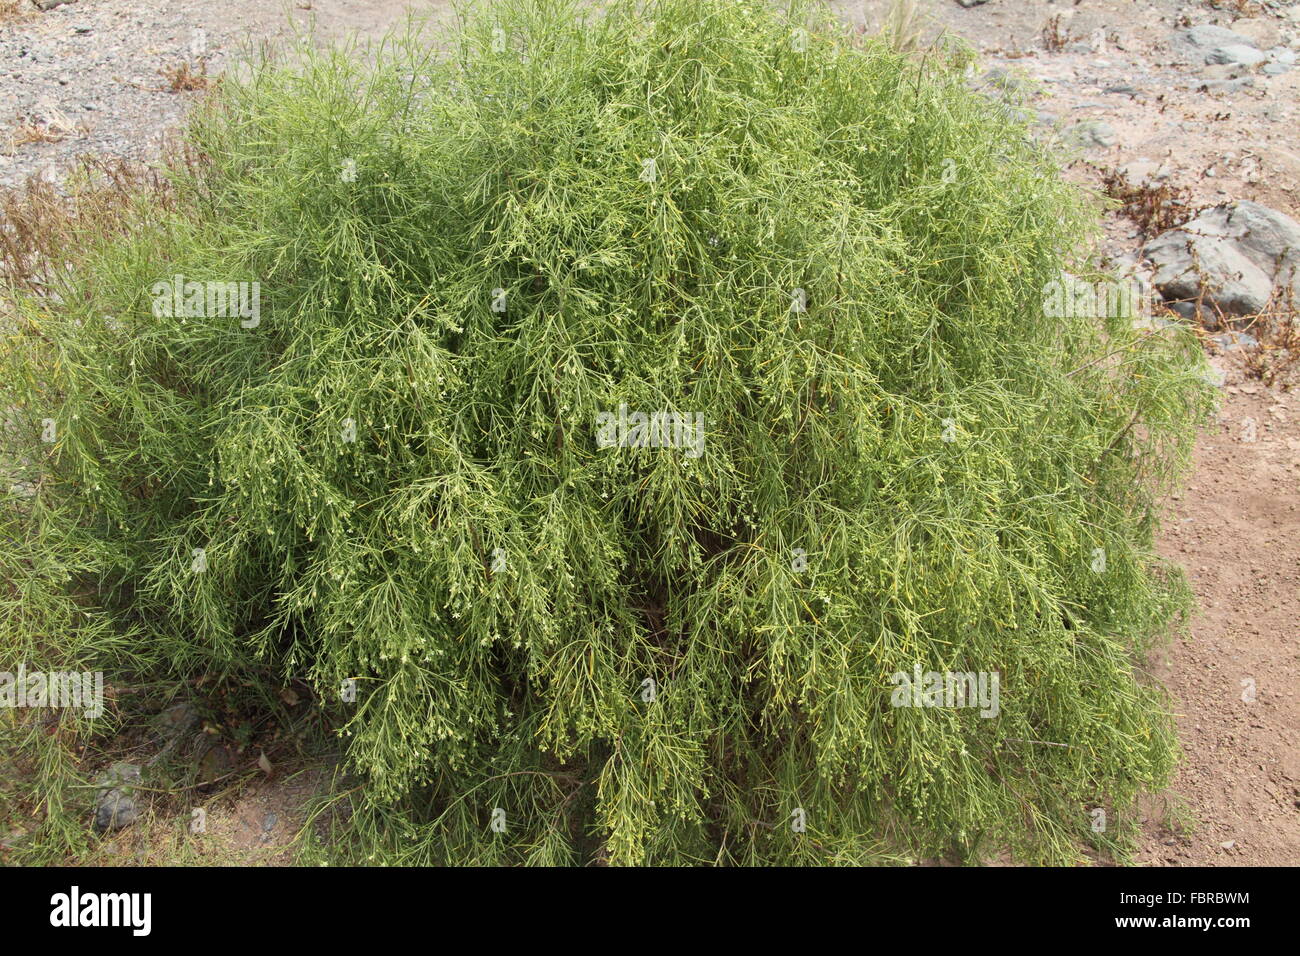 Balo shrub Plocama pendula a Canary Island endemic growing on Gran Canaria Stock Photo